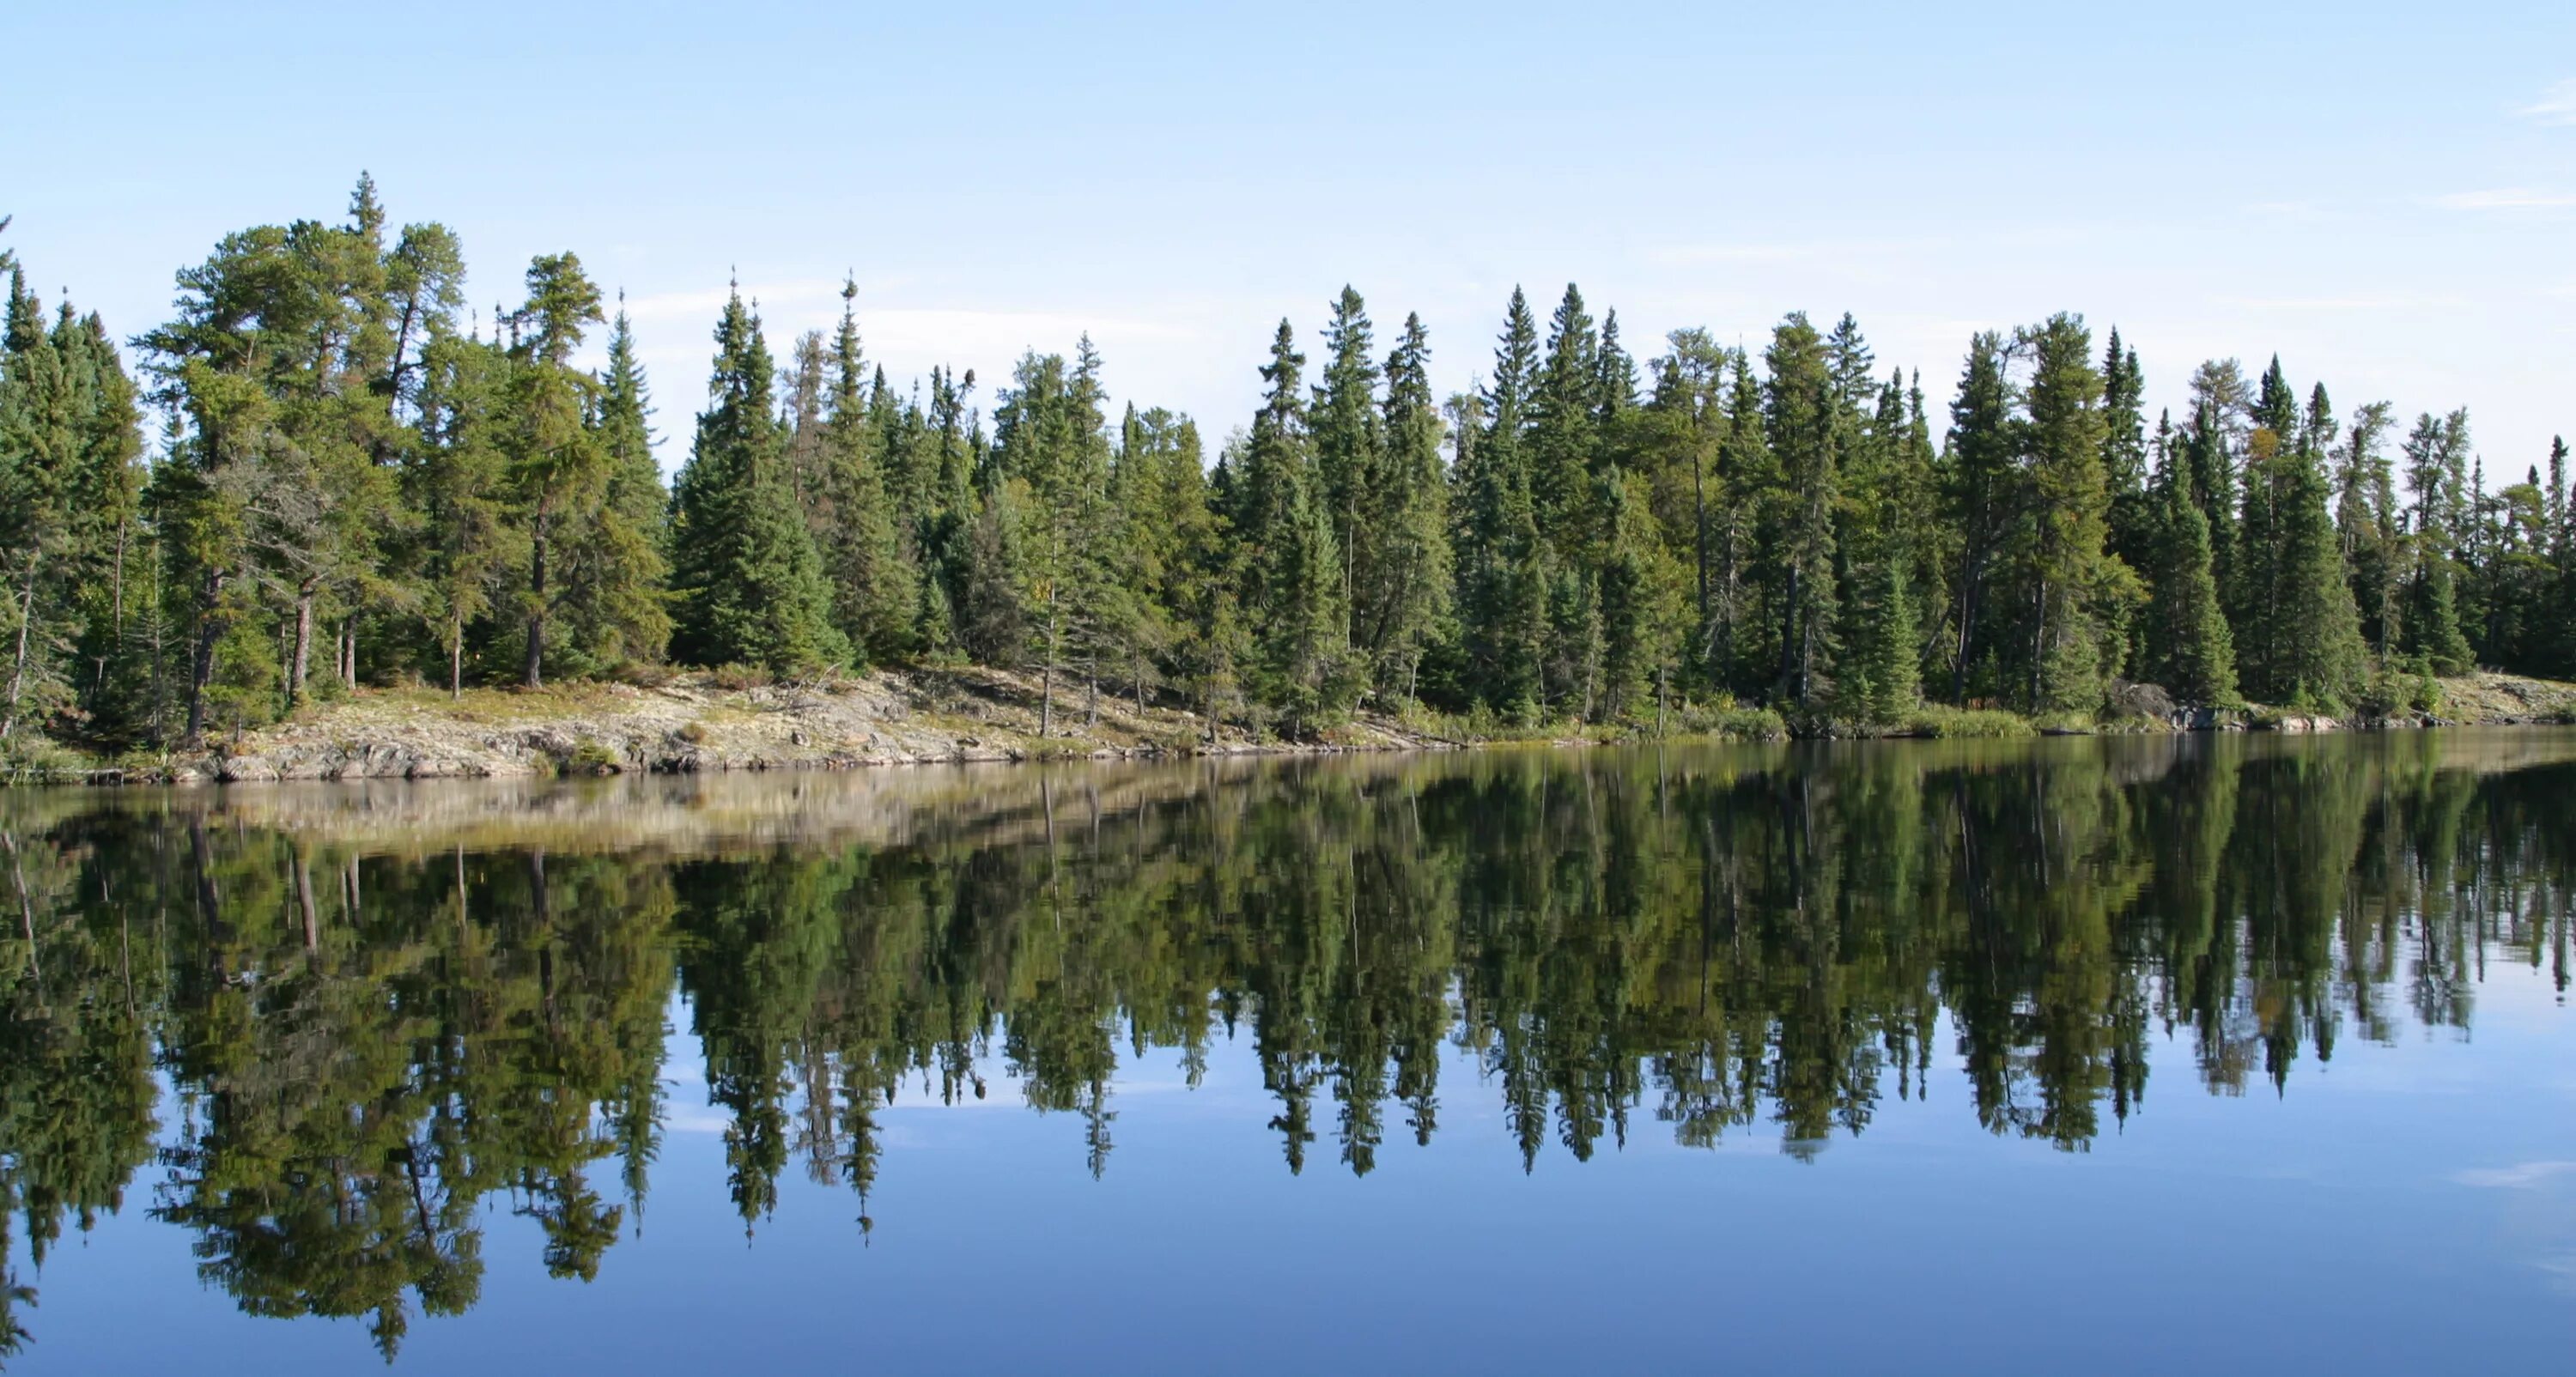 Средняя глубина озера онтарио. Озеро Онтарио. Алгонкинский парк Канада. Антартоозеро Онтарио. Озеро Онтарио животные.